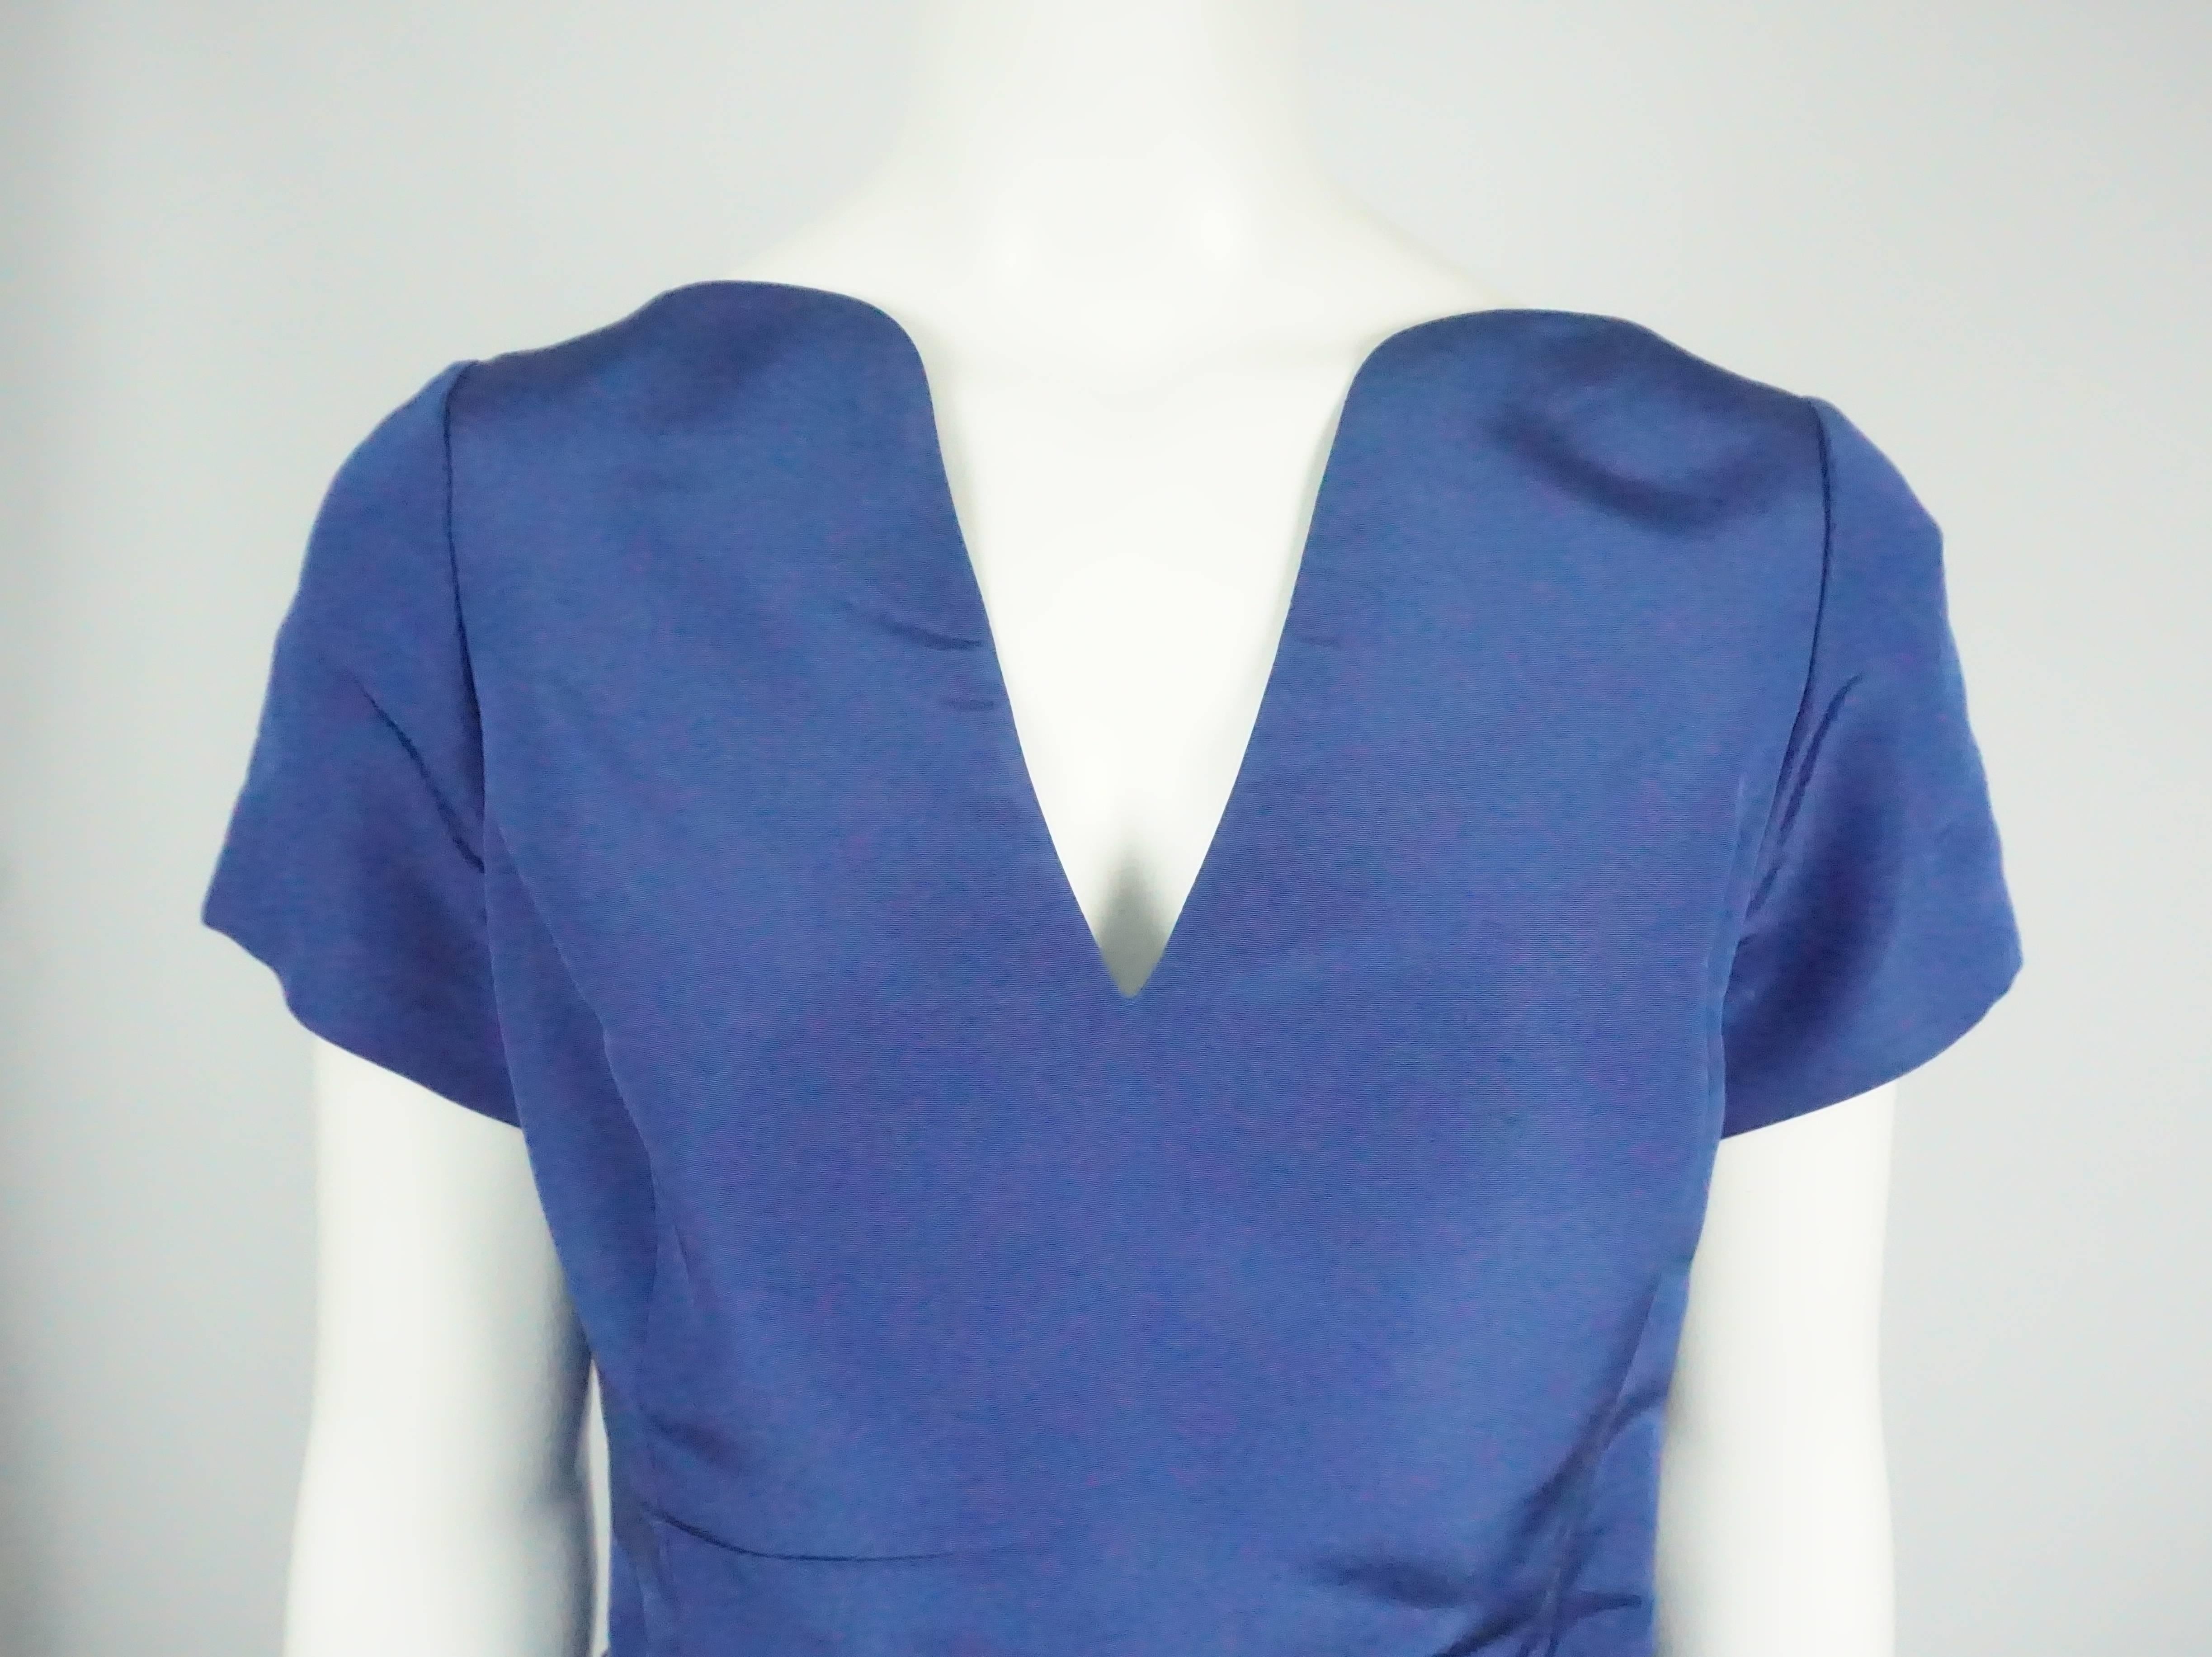 Women's Oscar De La Renta Electric Blue Taffeta Dress, S / S 2015